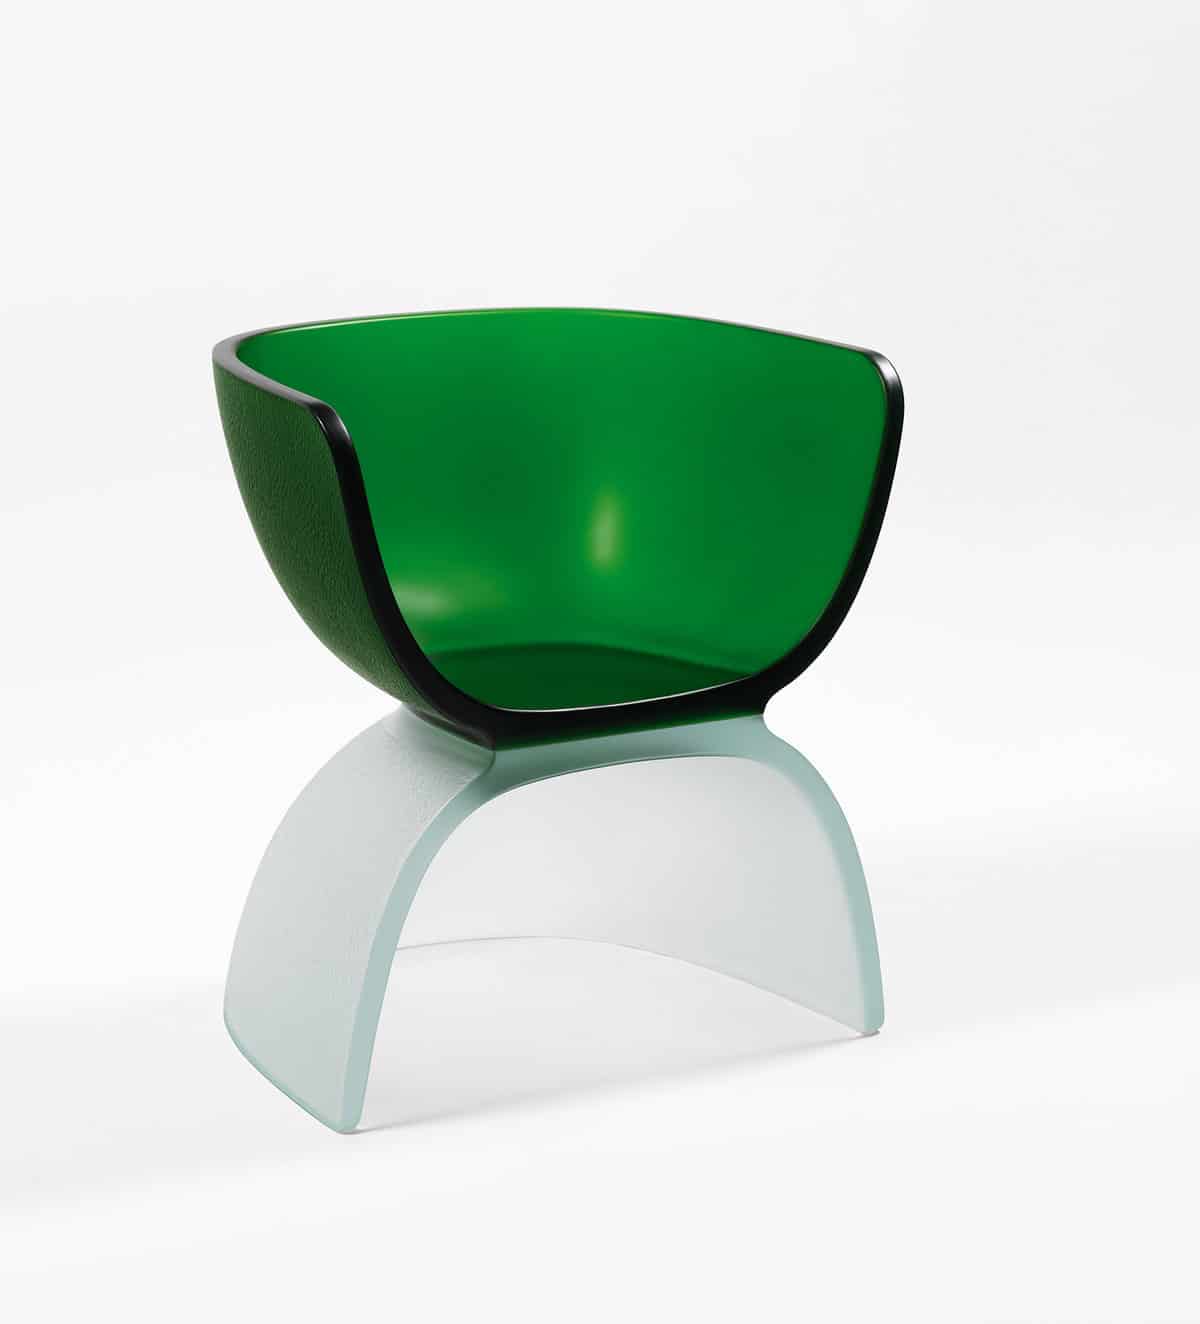 MARC NEWSON Green Glass Chair, 2017 Cast Glass 29 1/8 x 27 3/16 x